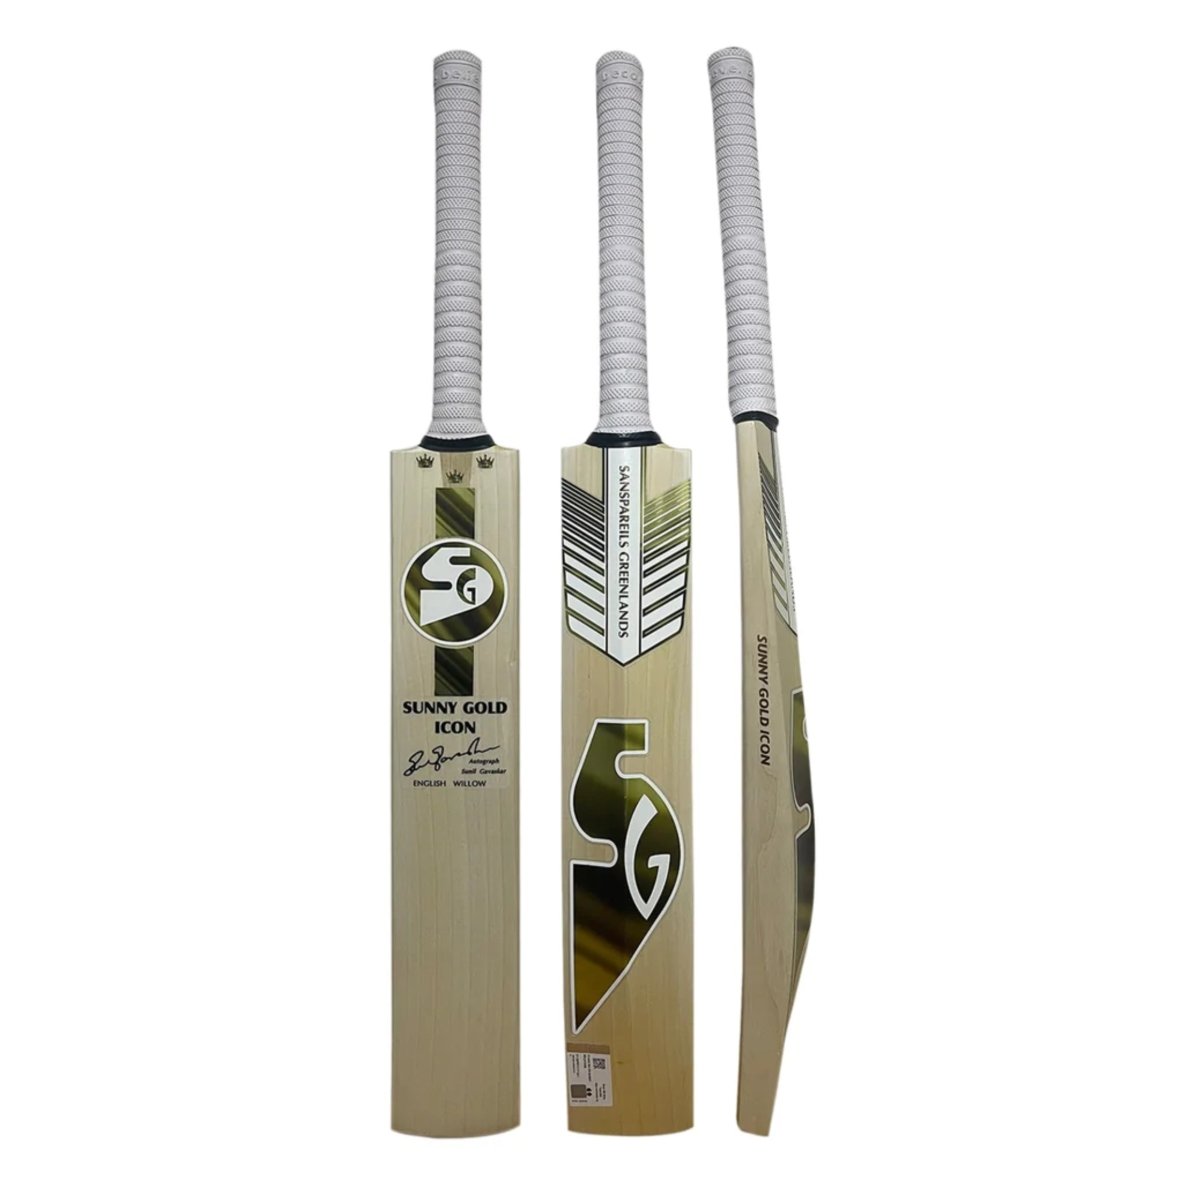 SG Sunny Gold Icon English Willow Cricket Bat - Acrux Sports